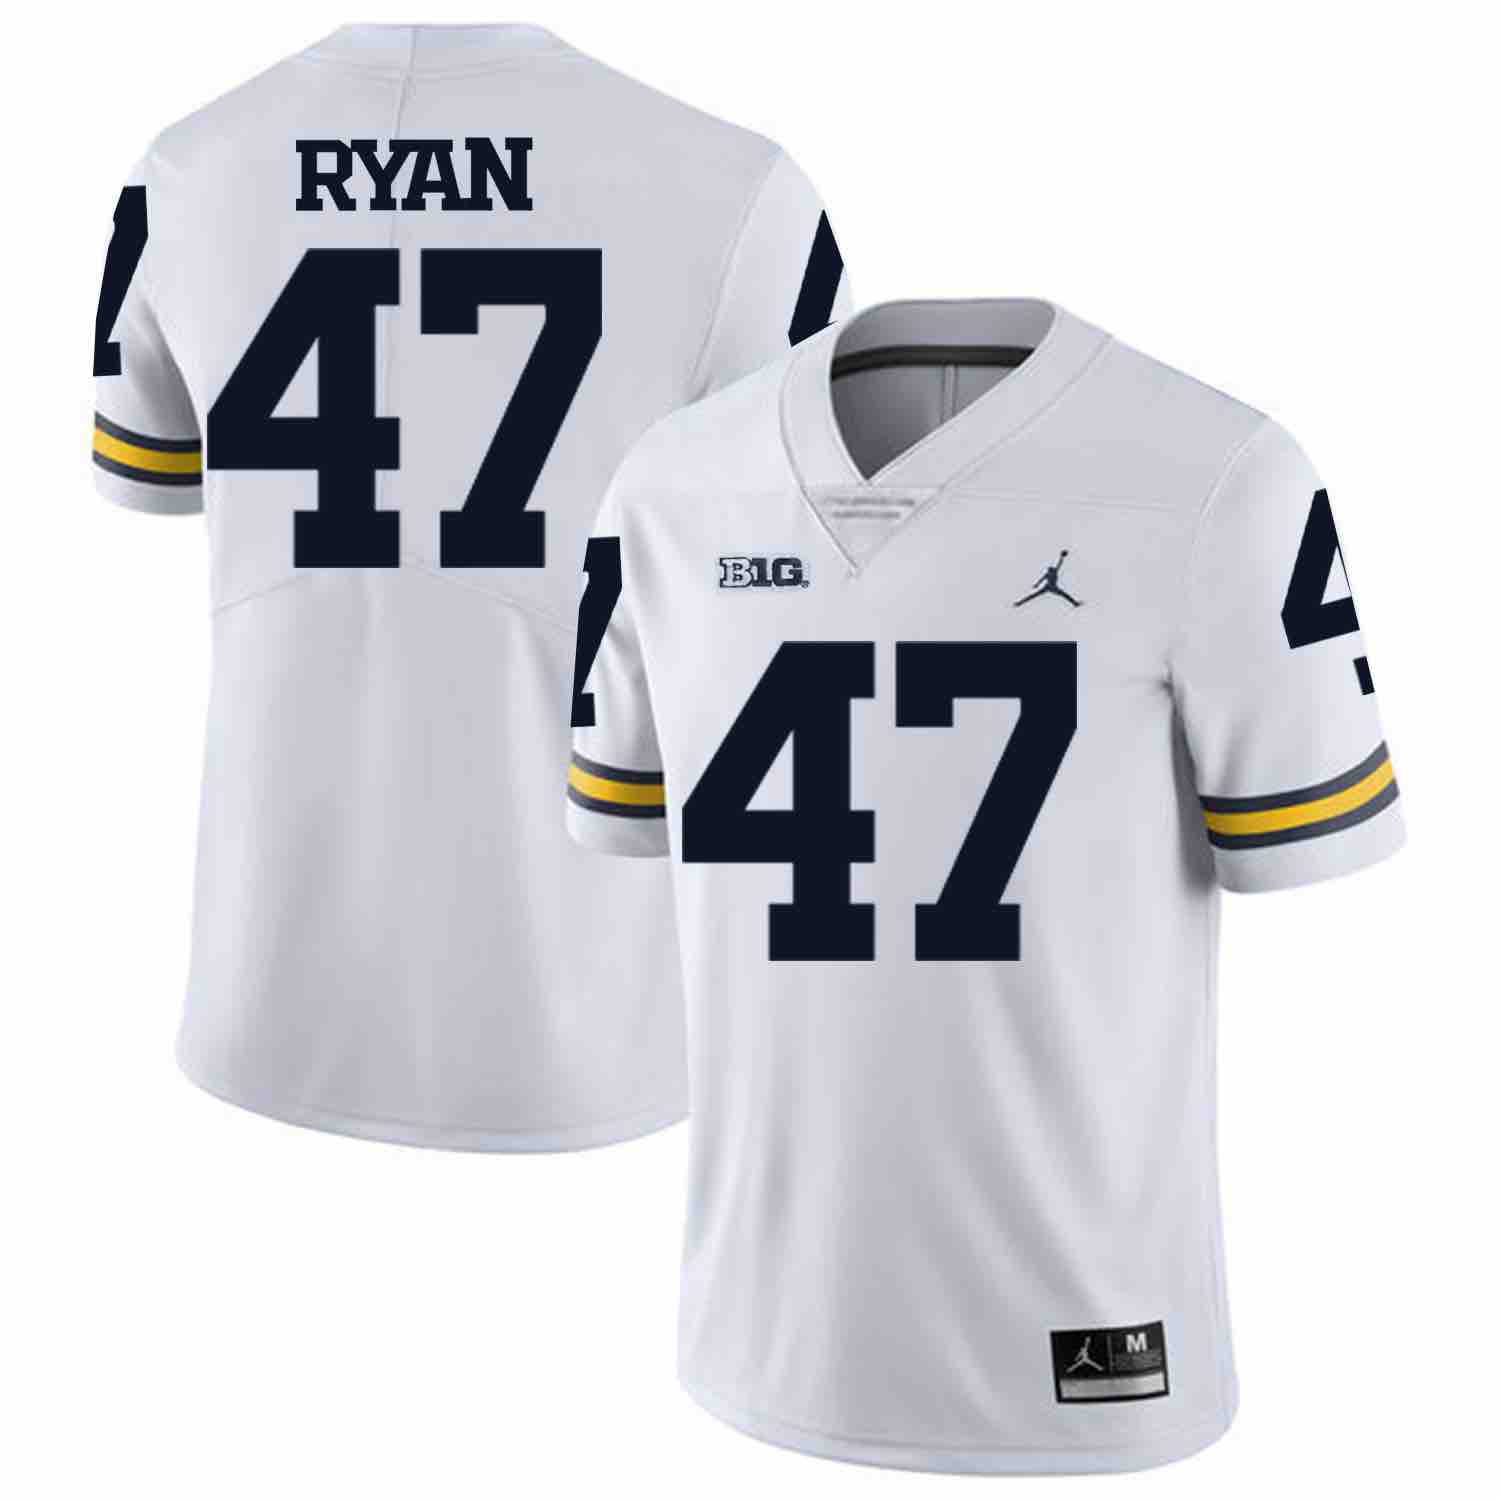 NCAA Michigan Wolverines #47 Ryan White Football Jersey